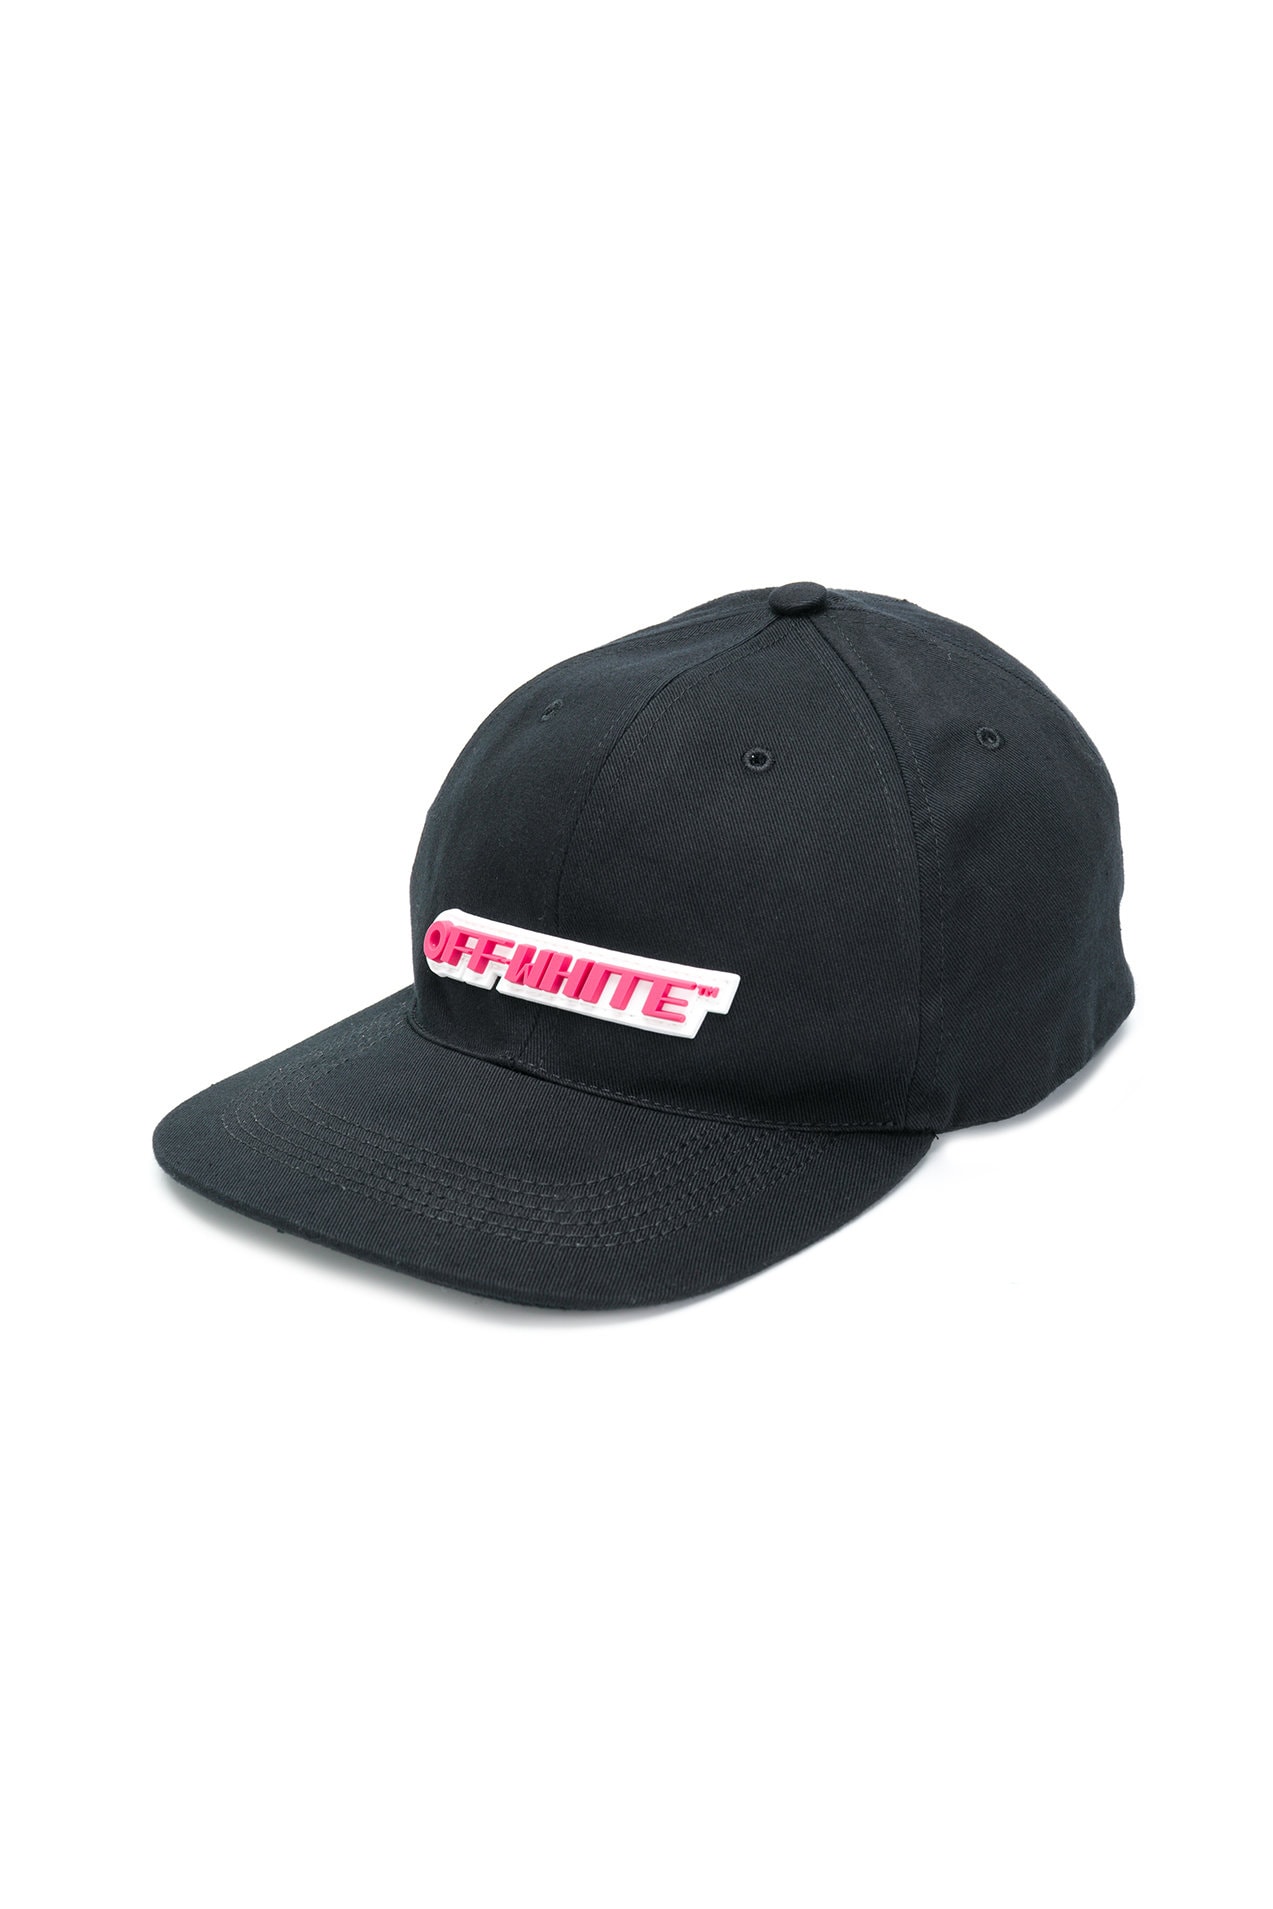 off white pink white logo baseball cap logo normcore